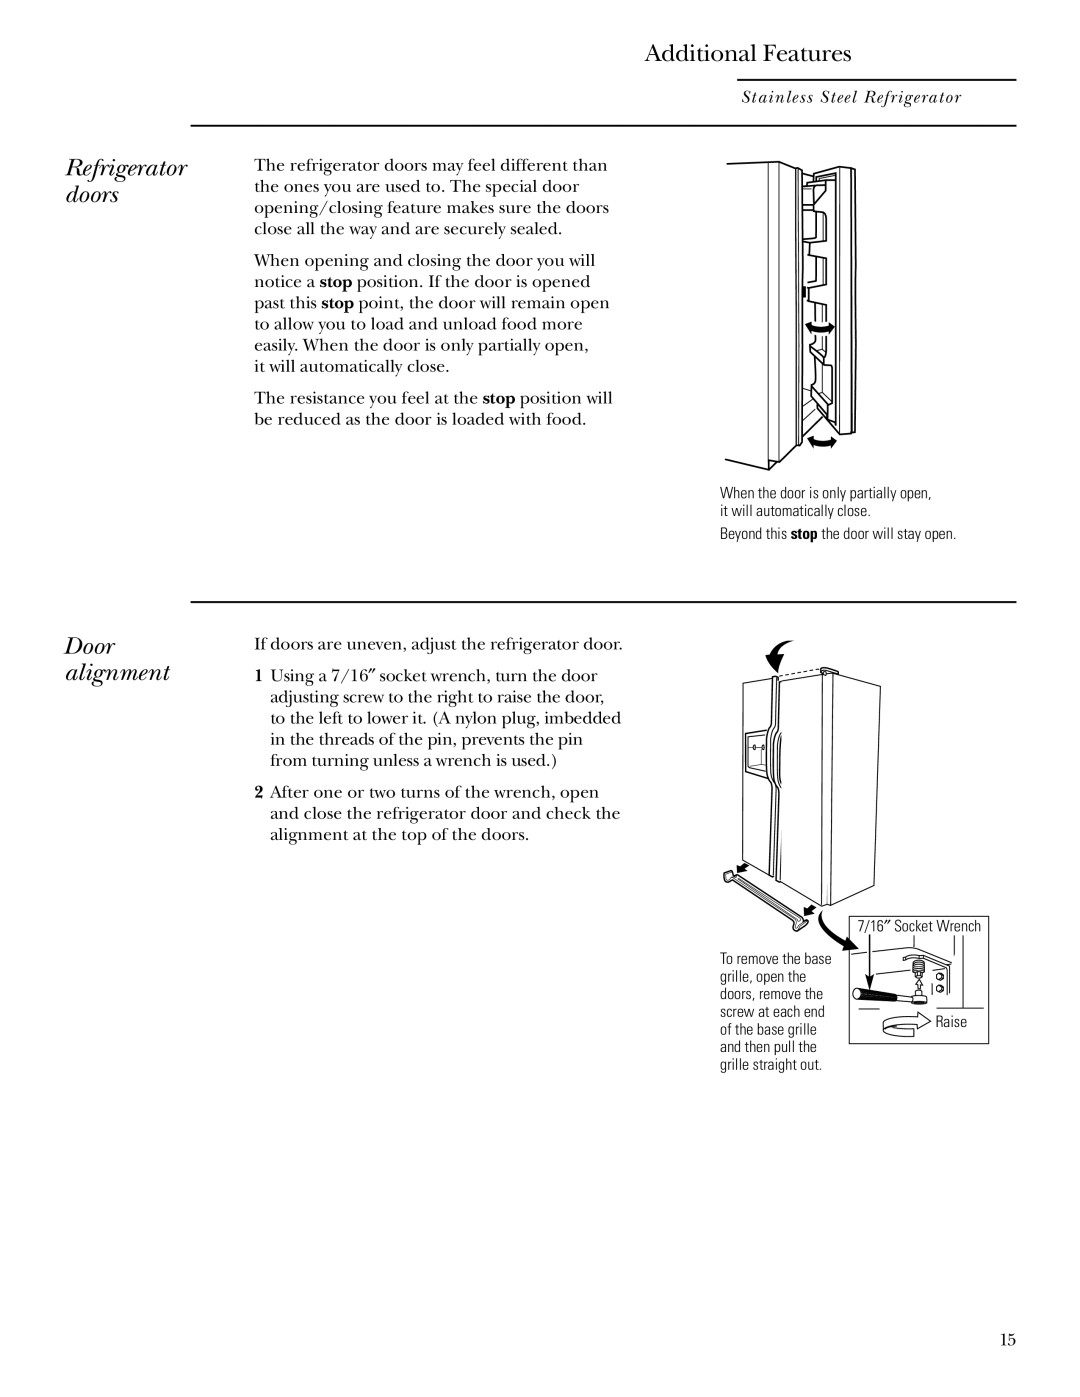 GE Monogram owner manual Refrigerator doors, Additional Features, Door alignment, Stainless Steel Refrigerator 